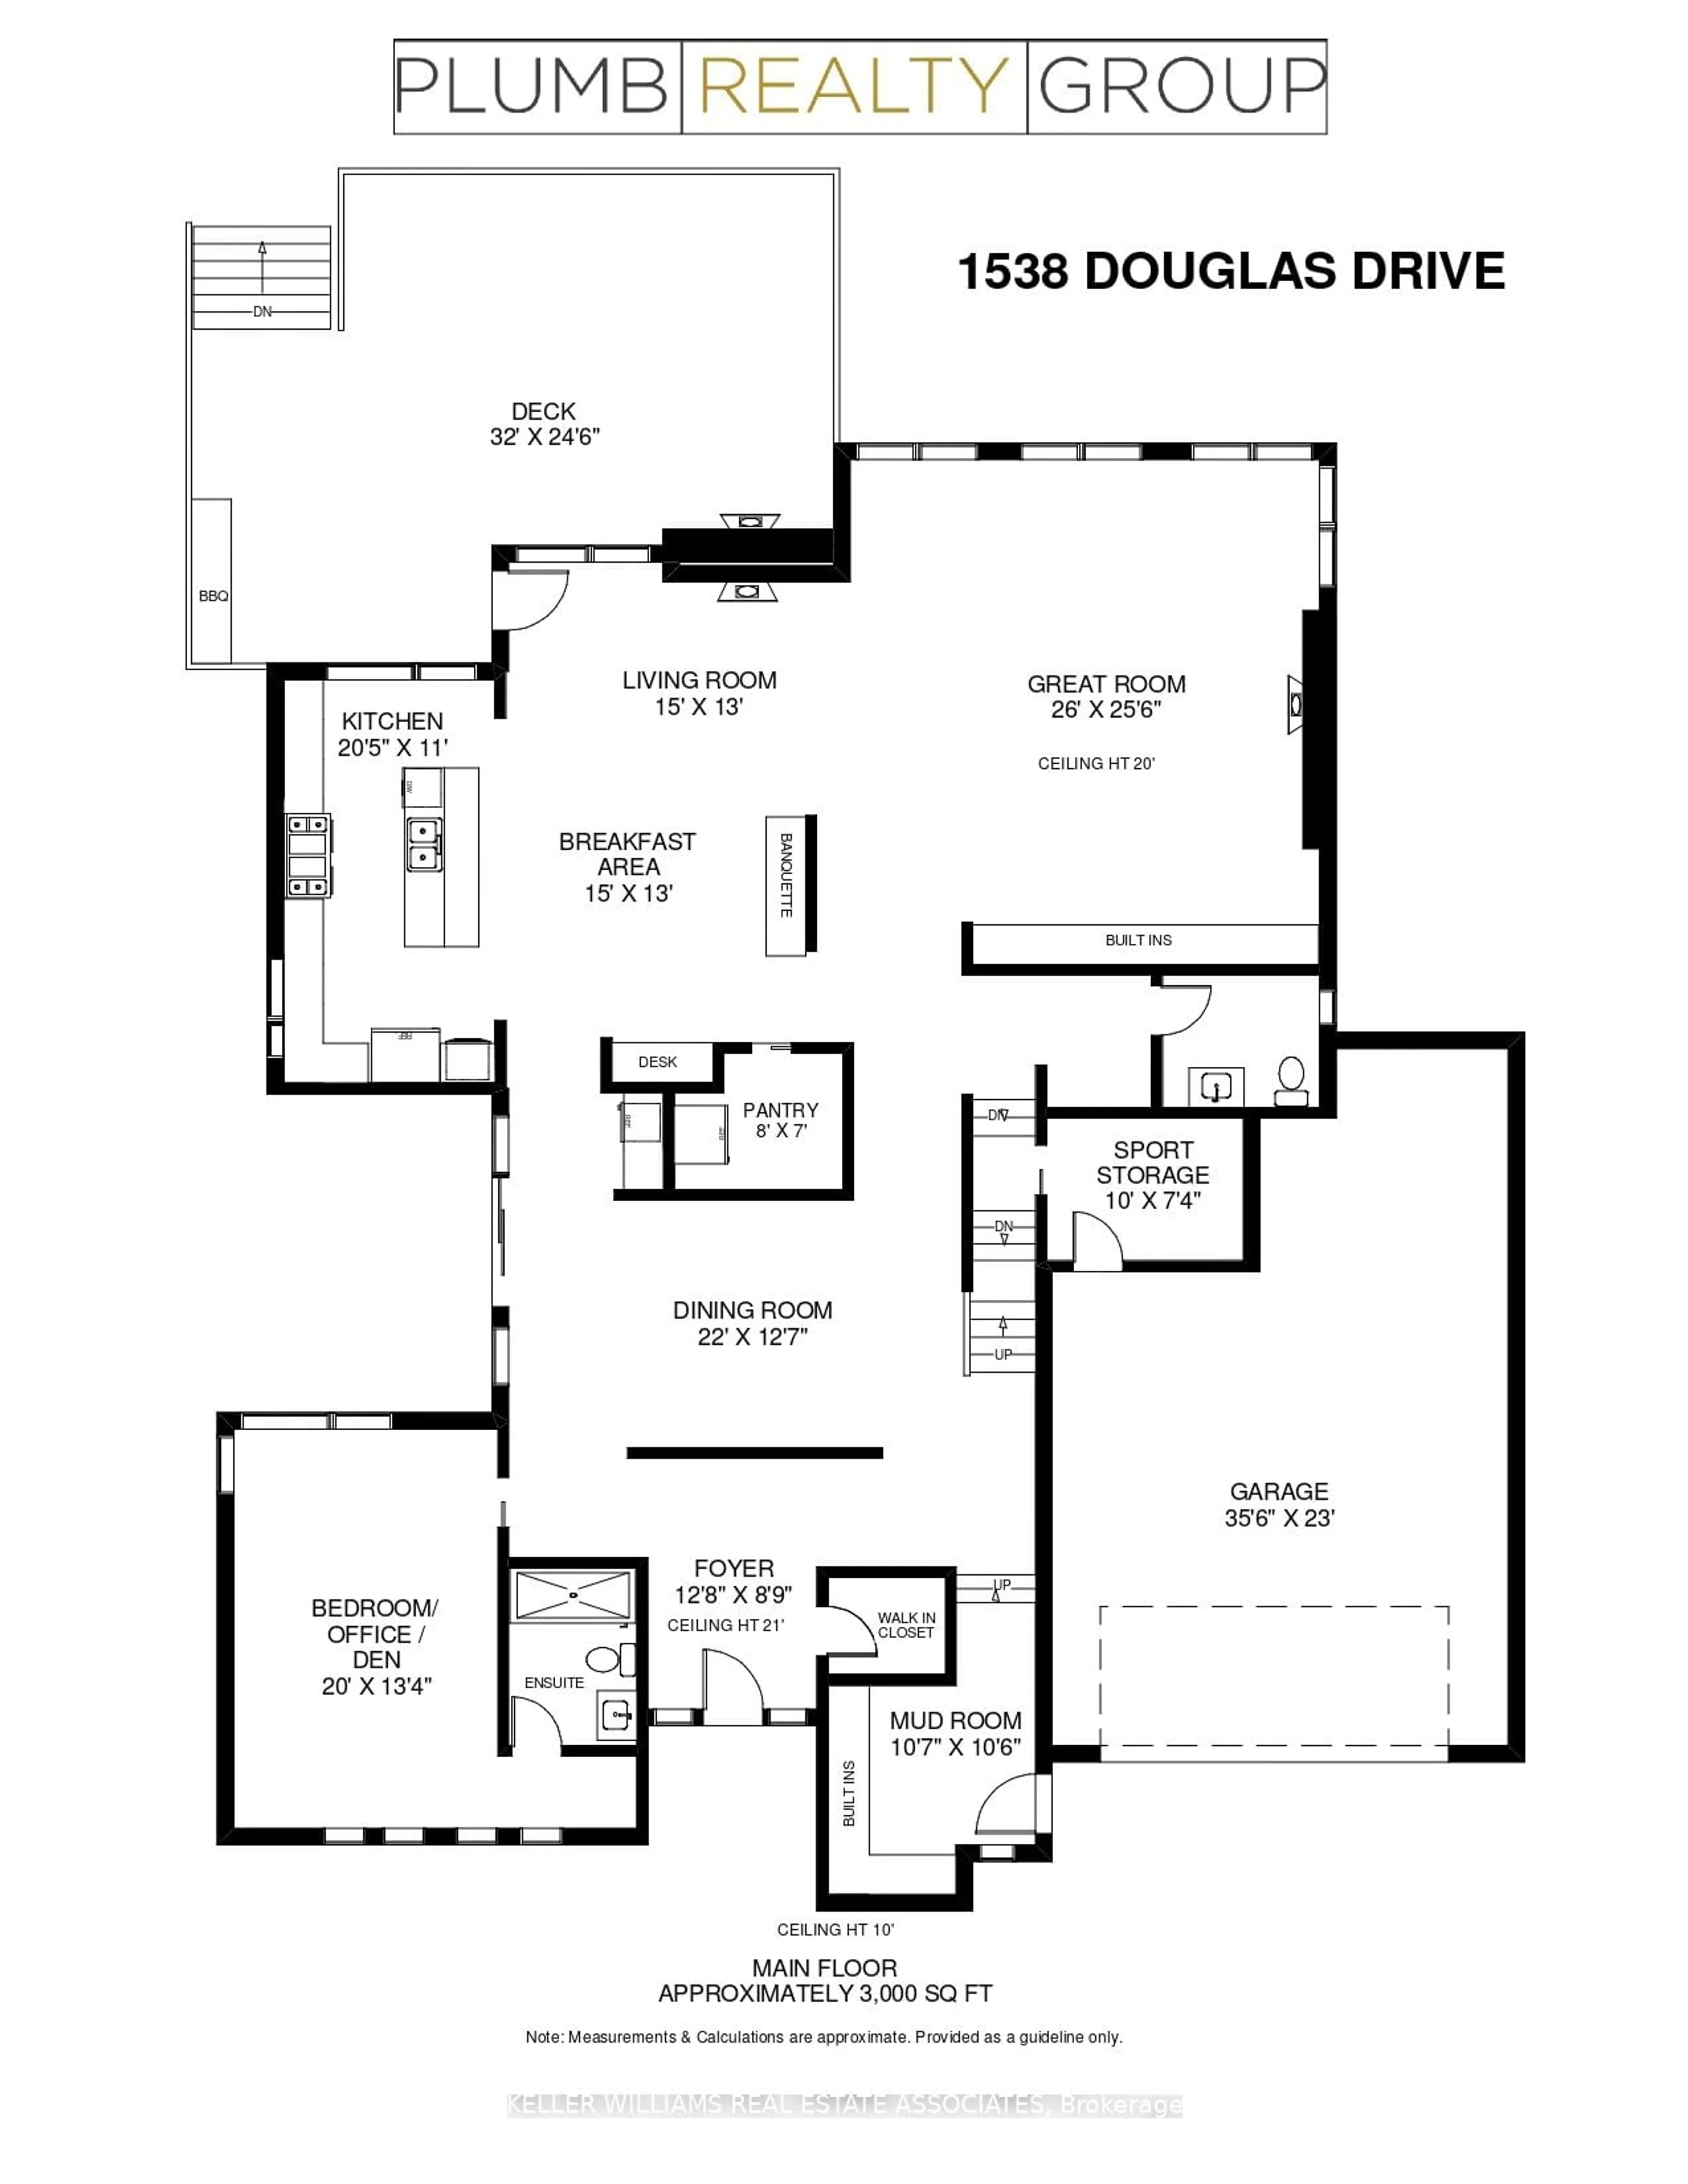 Floor plan for 1538 Douglas Dr, Mississauga Ontario L5G 2W8